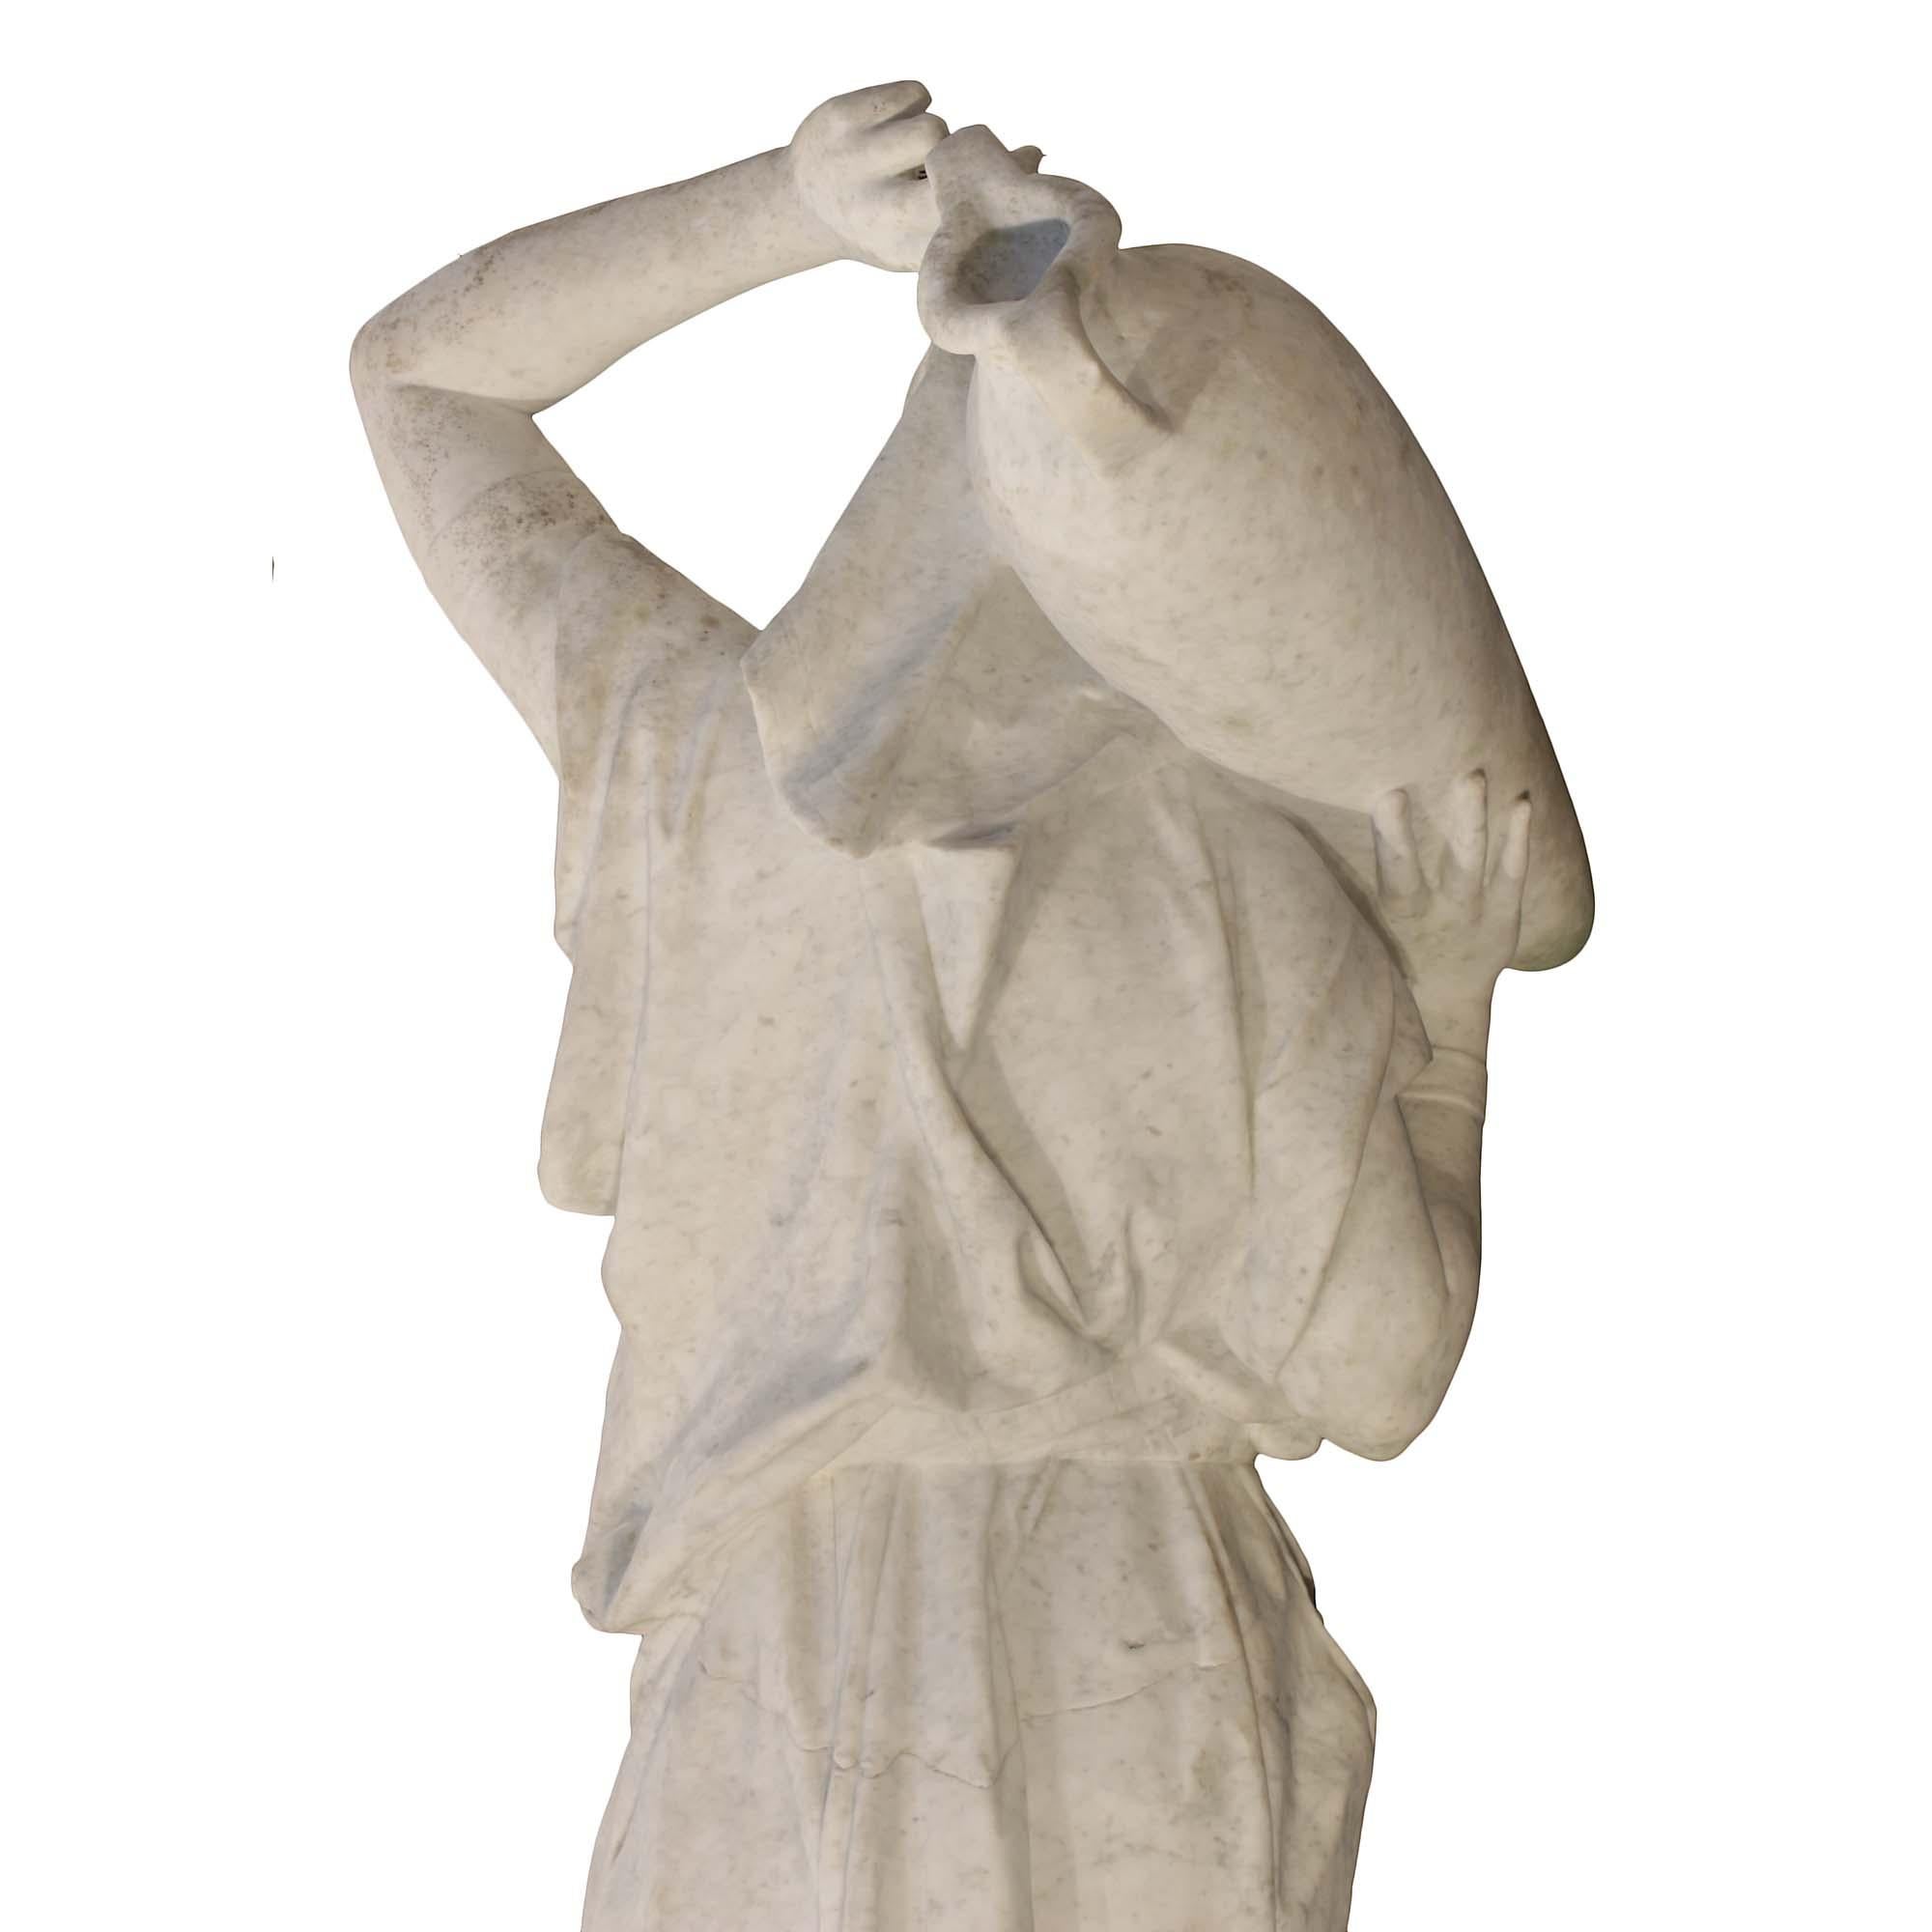 Italian 19th Century White Carrrara Marble Statue, Signed Lazzarini For Sale 4